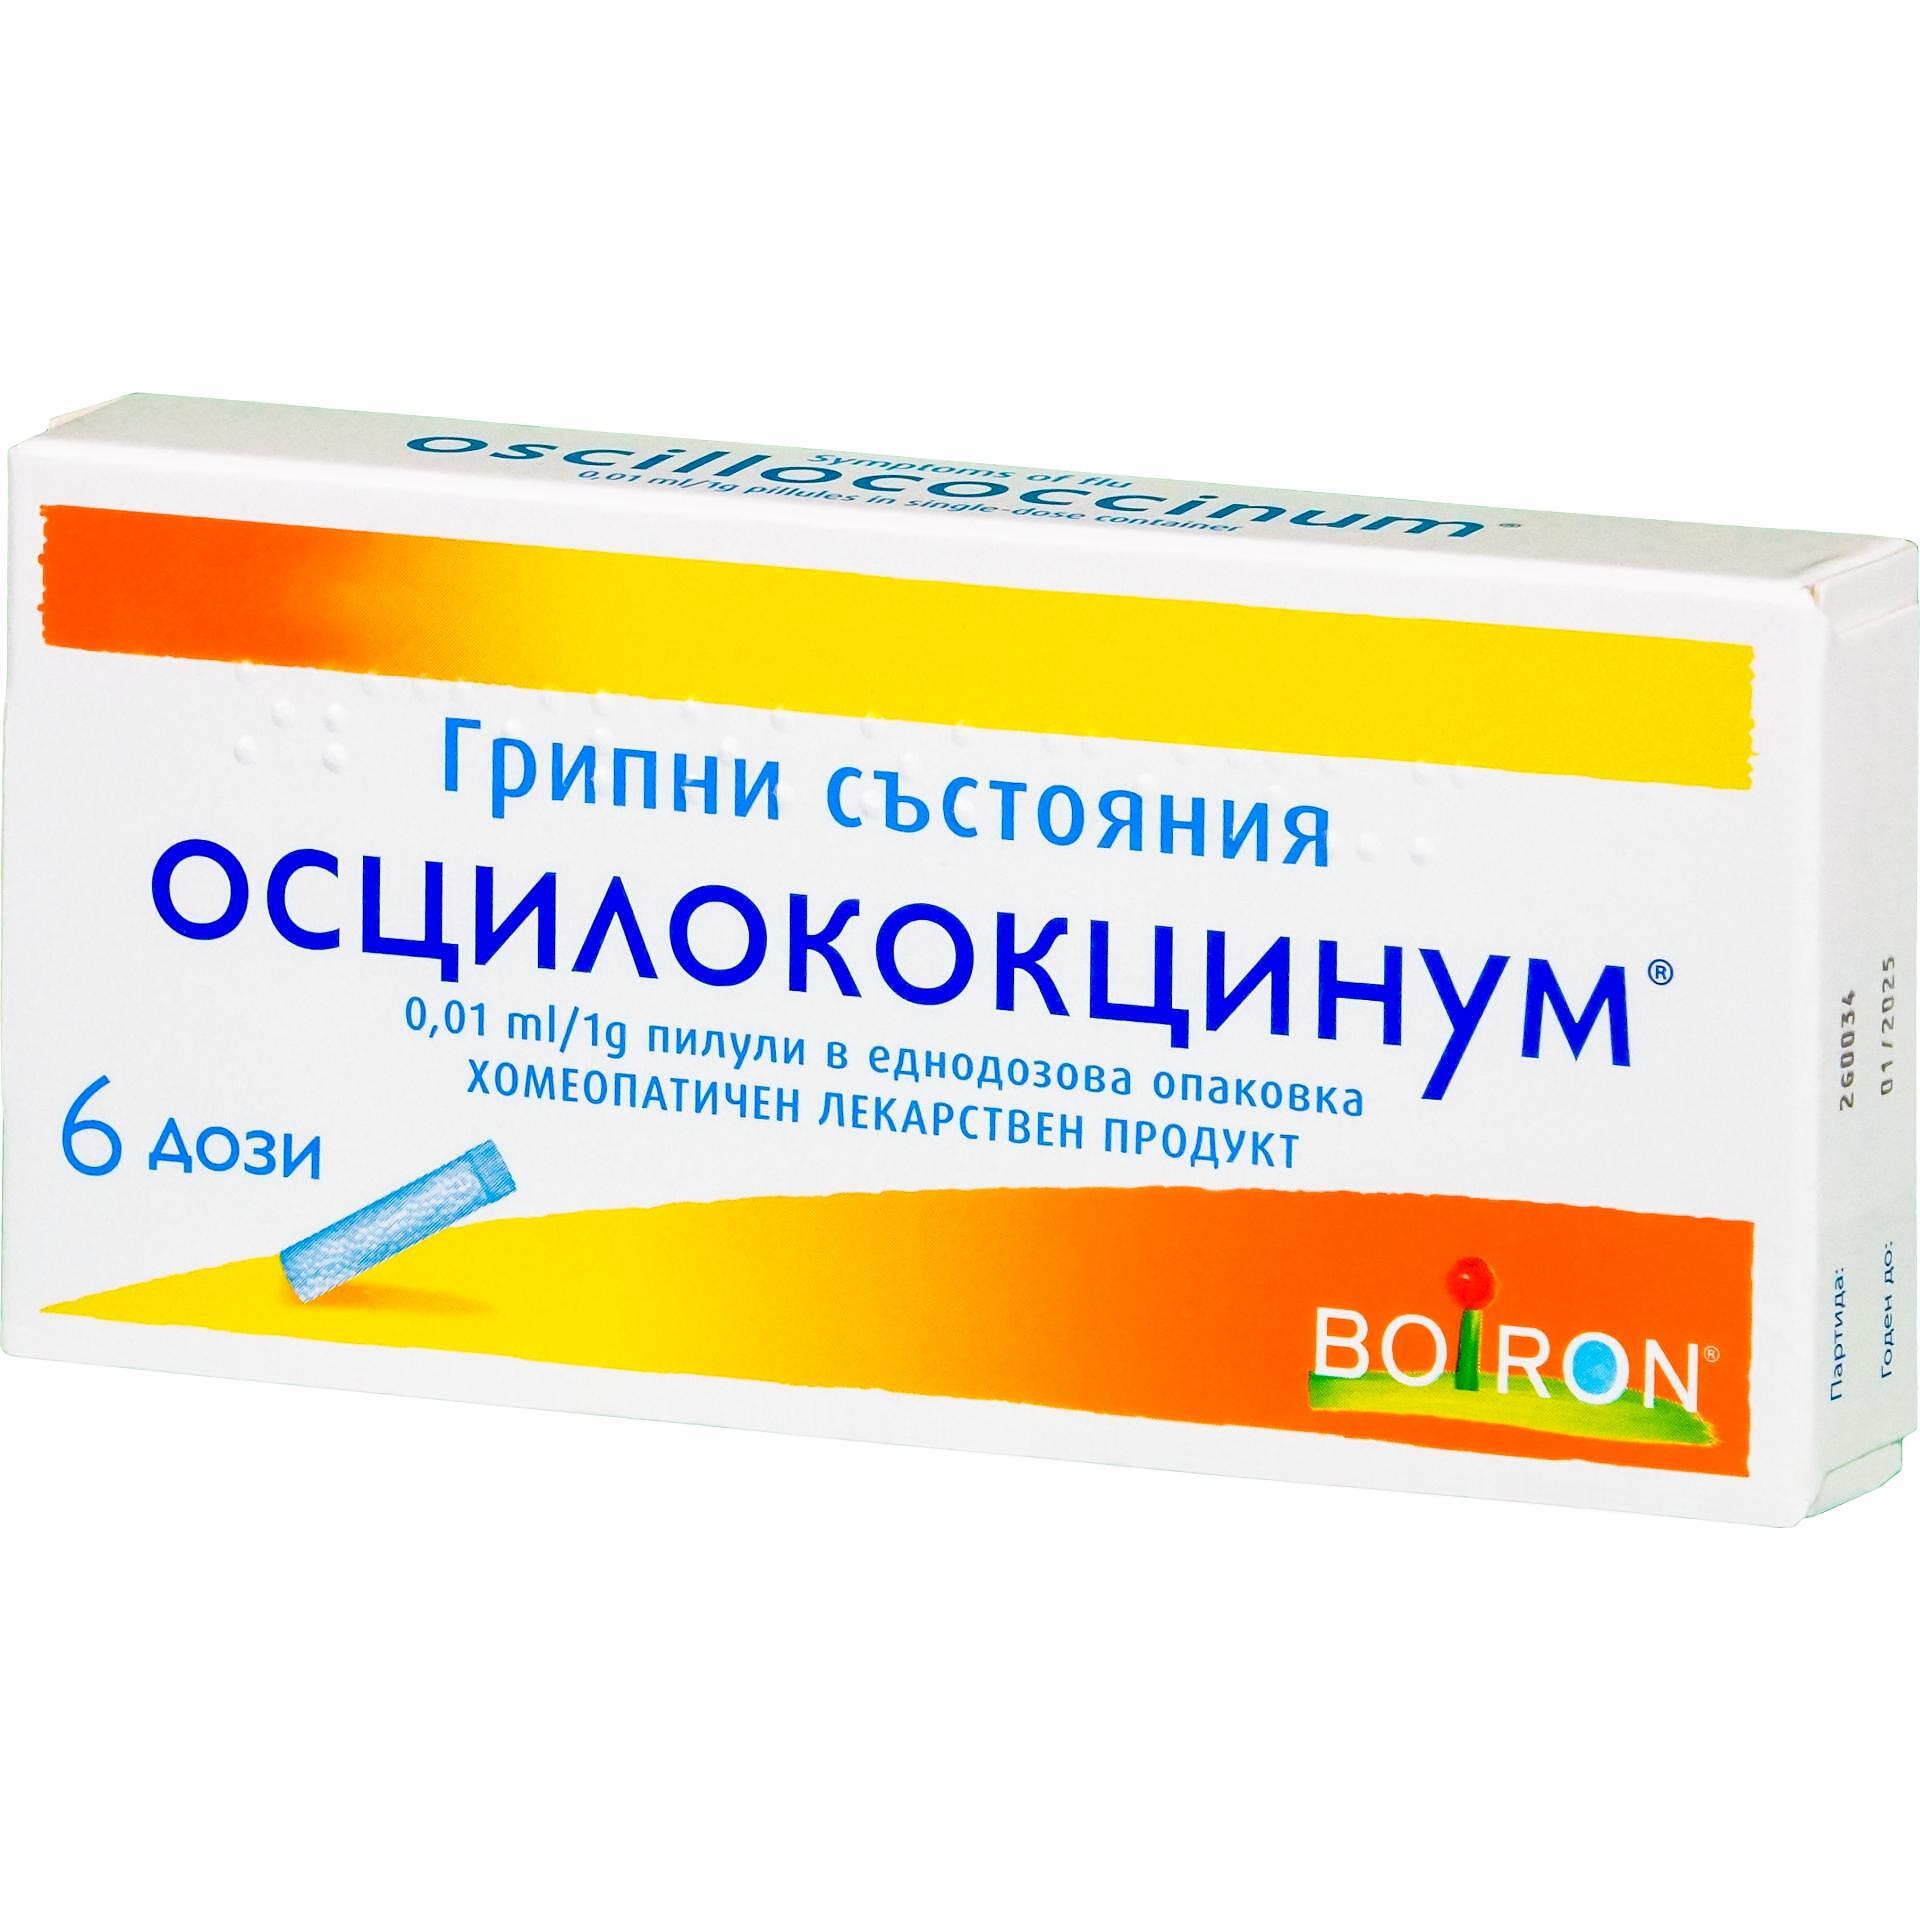 Осцилококцинум грипни състояния, 0.01 мл / 1 г пилули, 6 дози | Oscillococcinum, Боарон, Boiron